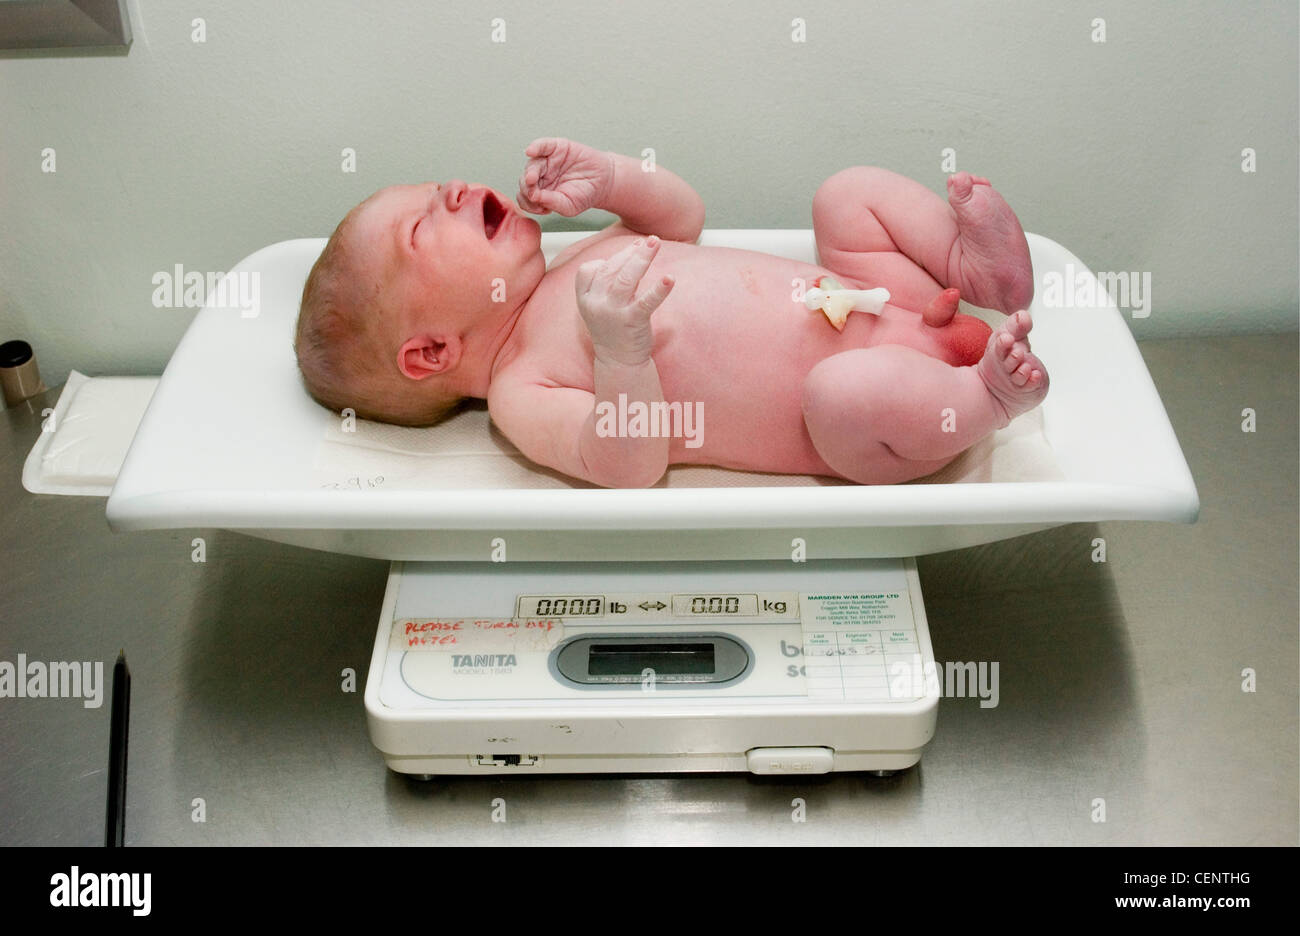 Newborn baby boy on a white scale, crying Stock Photo - Alamy